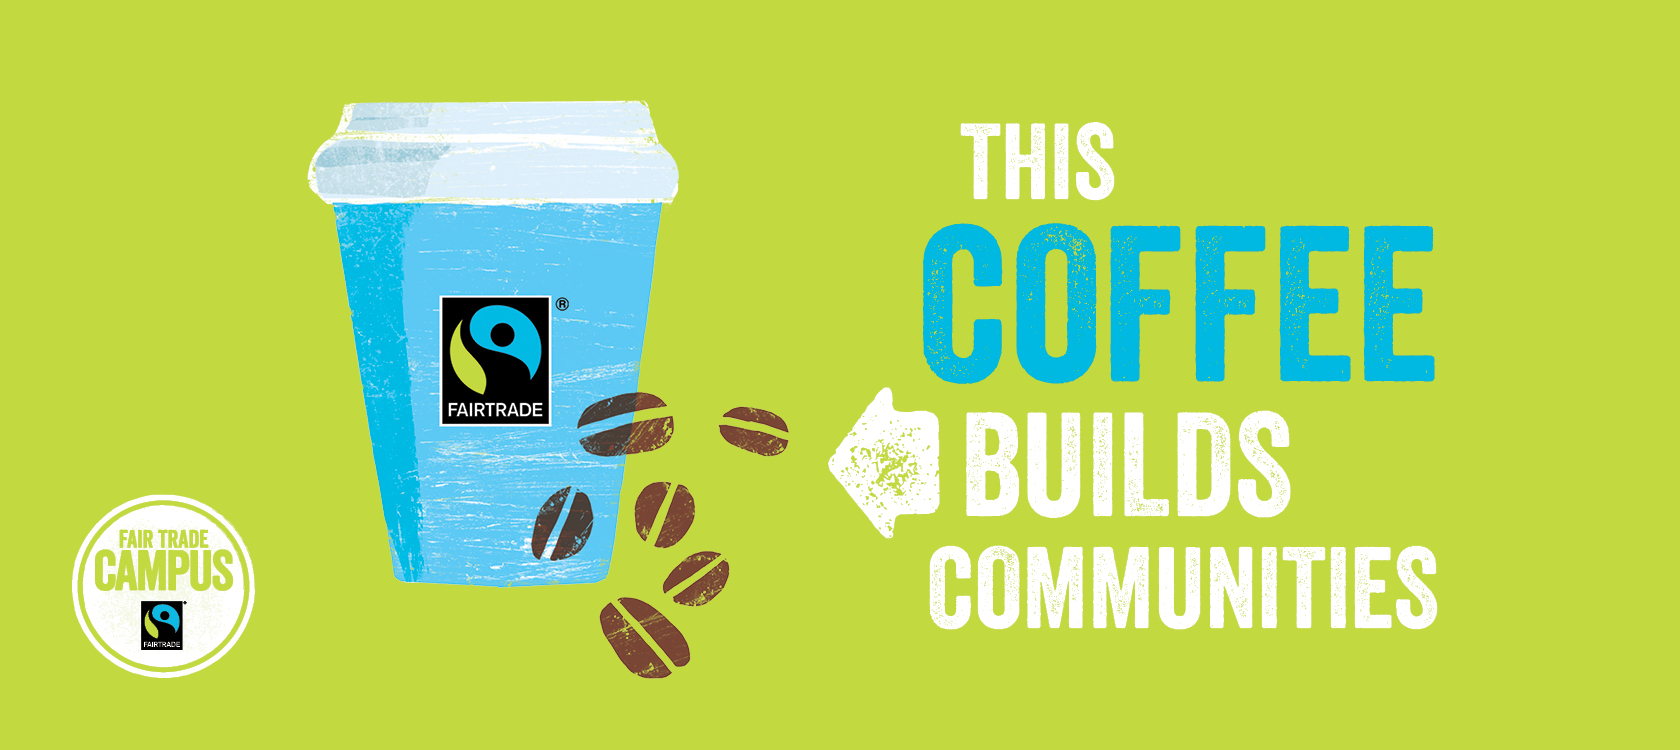 This coffee build communities marketing image